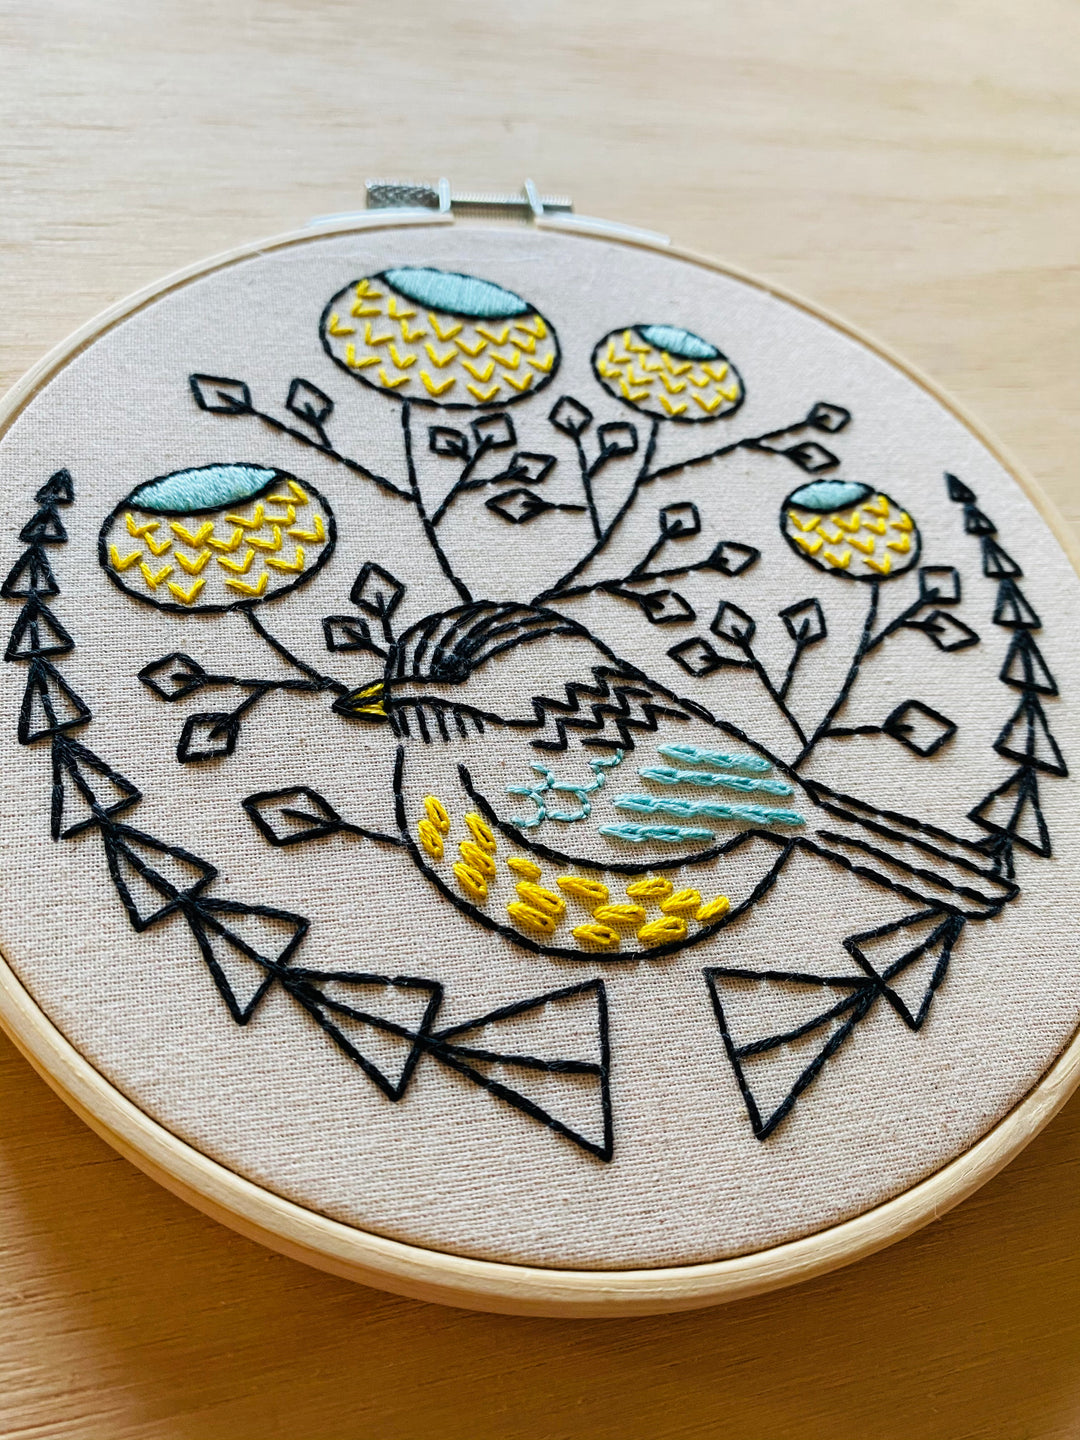 Craftermoon - Chickadee Embroidery Kit 4